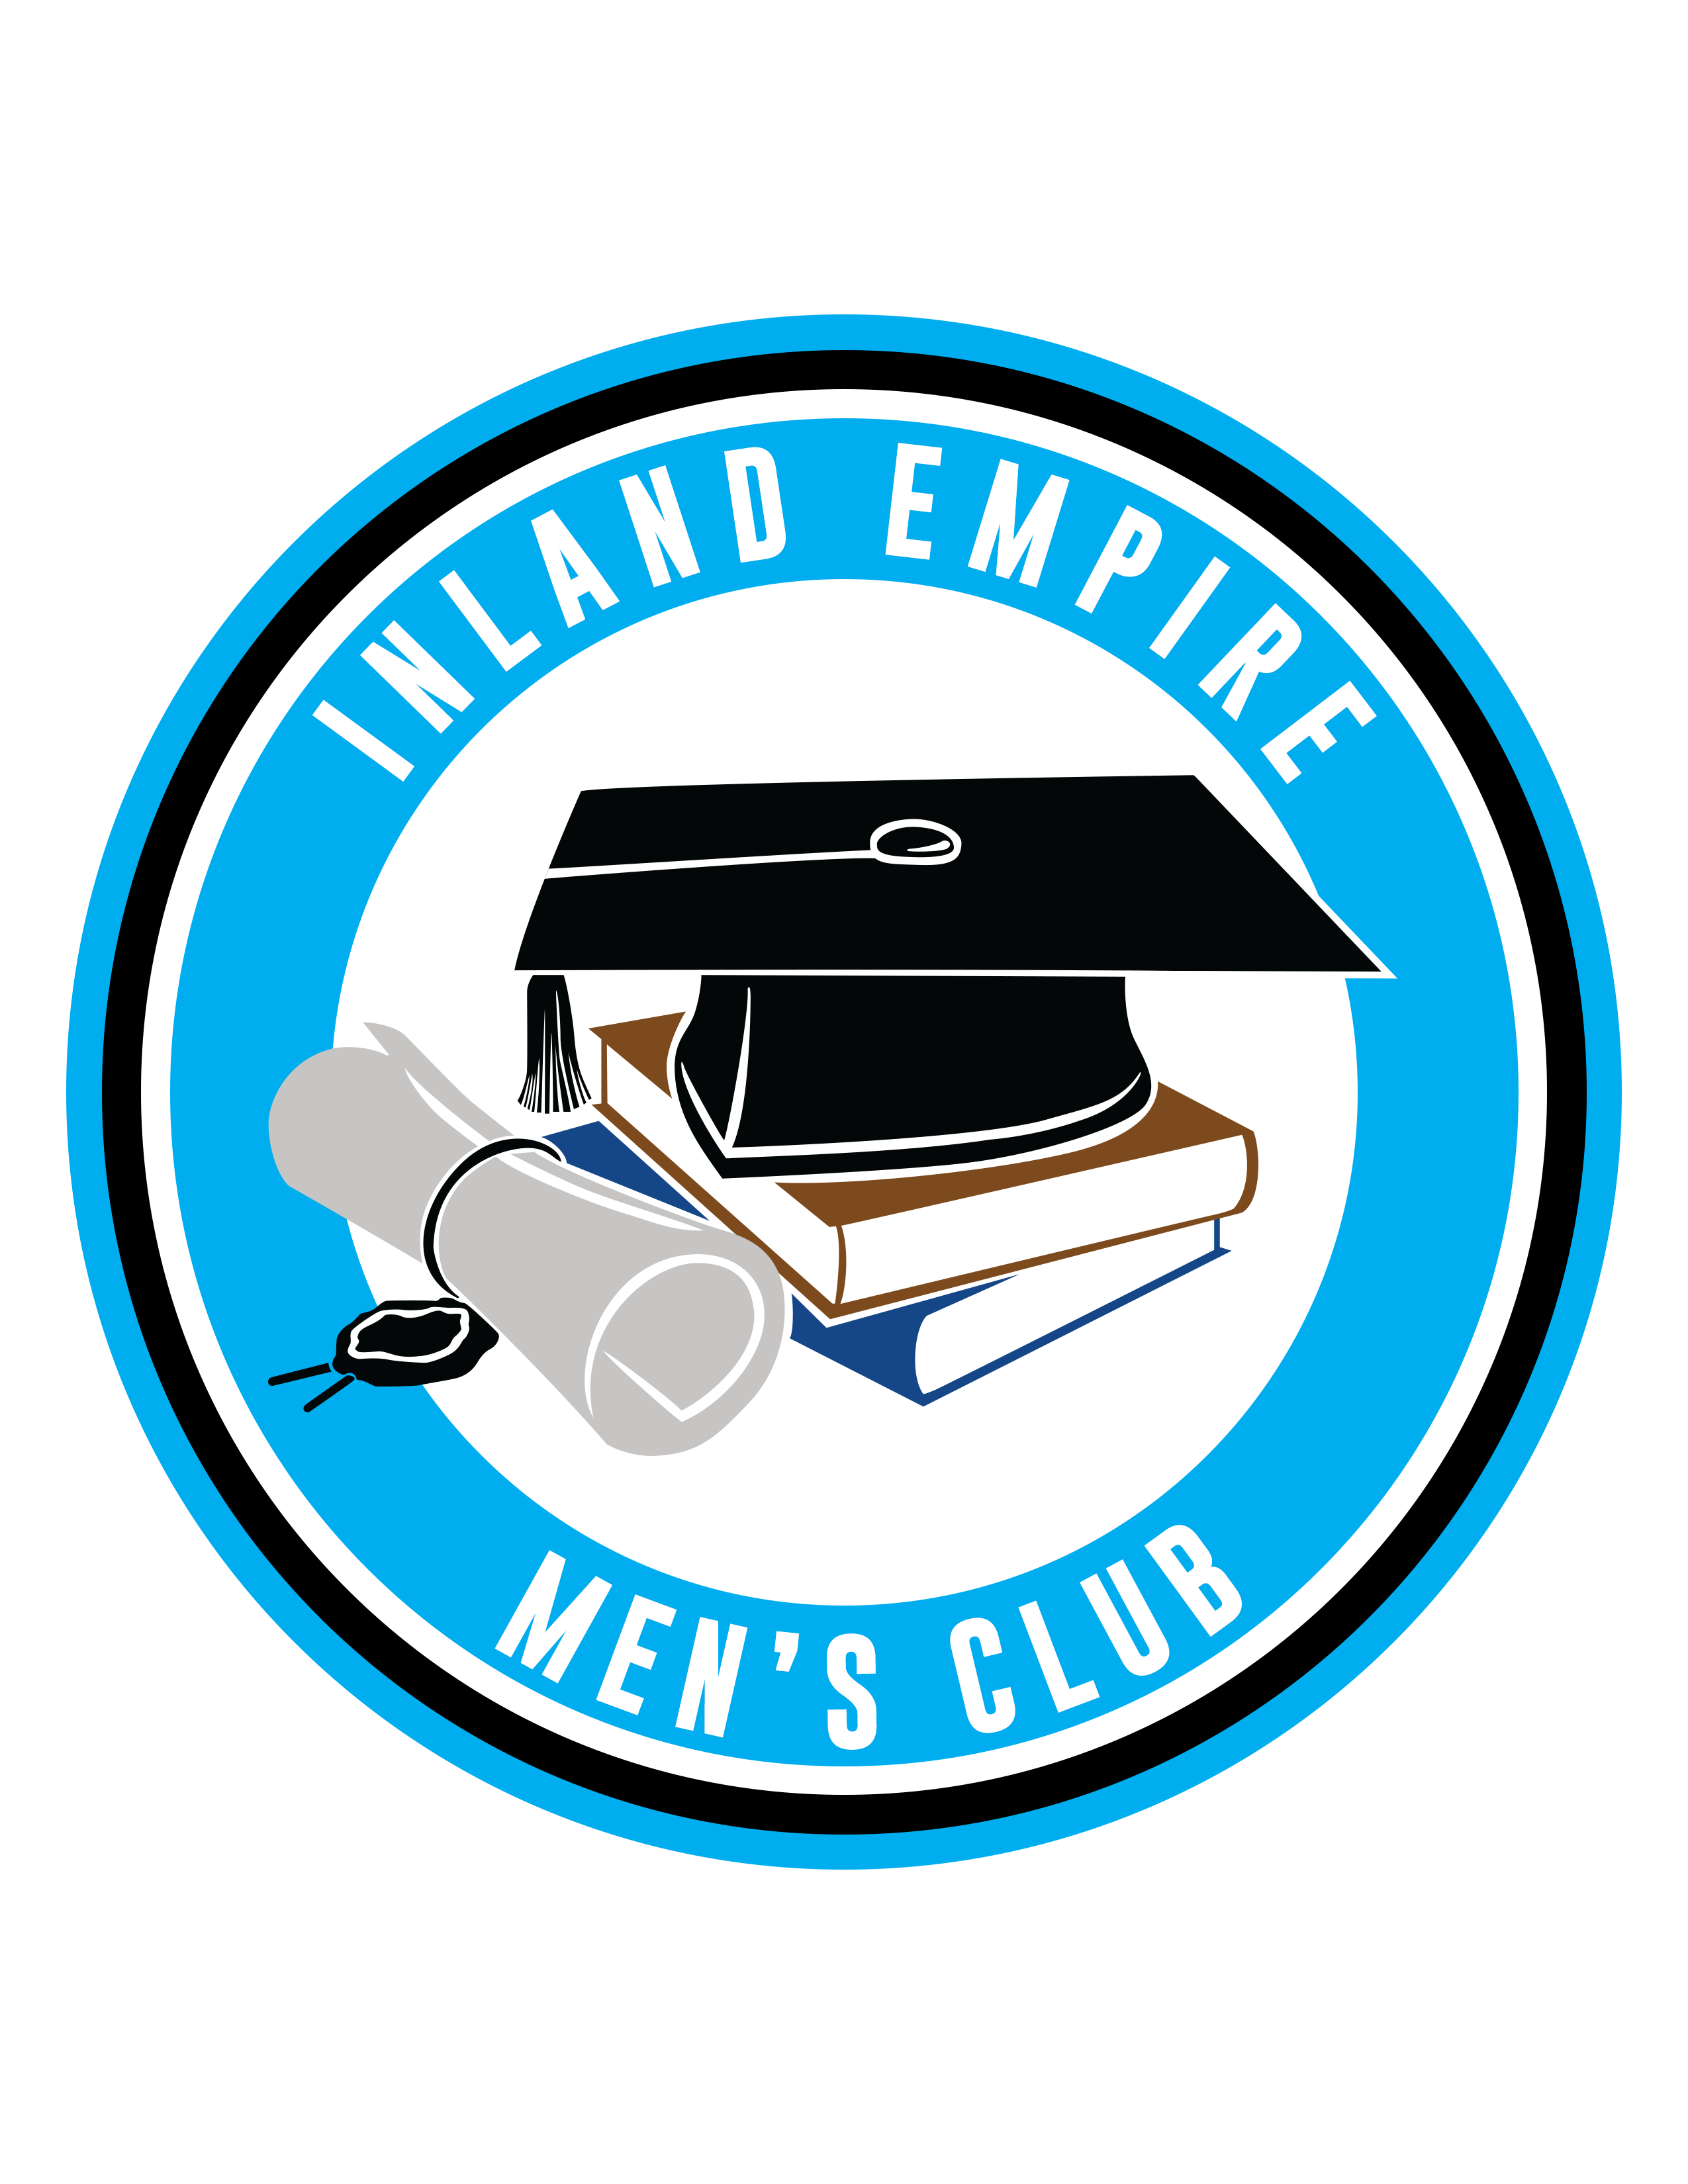 Inland Empire Men's Club